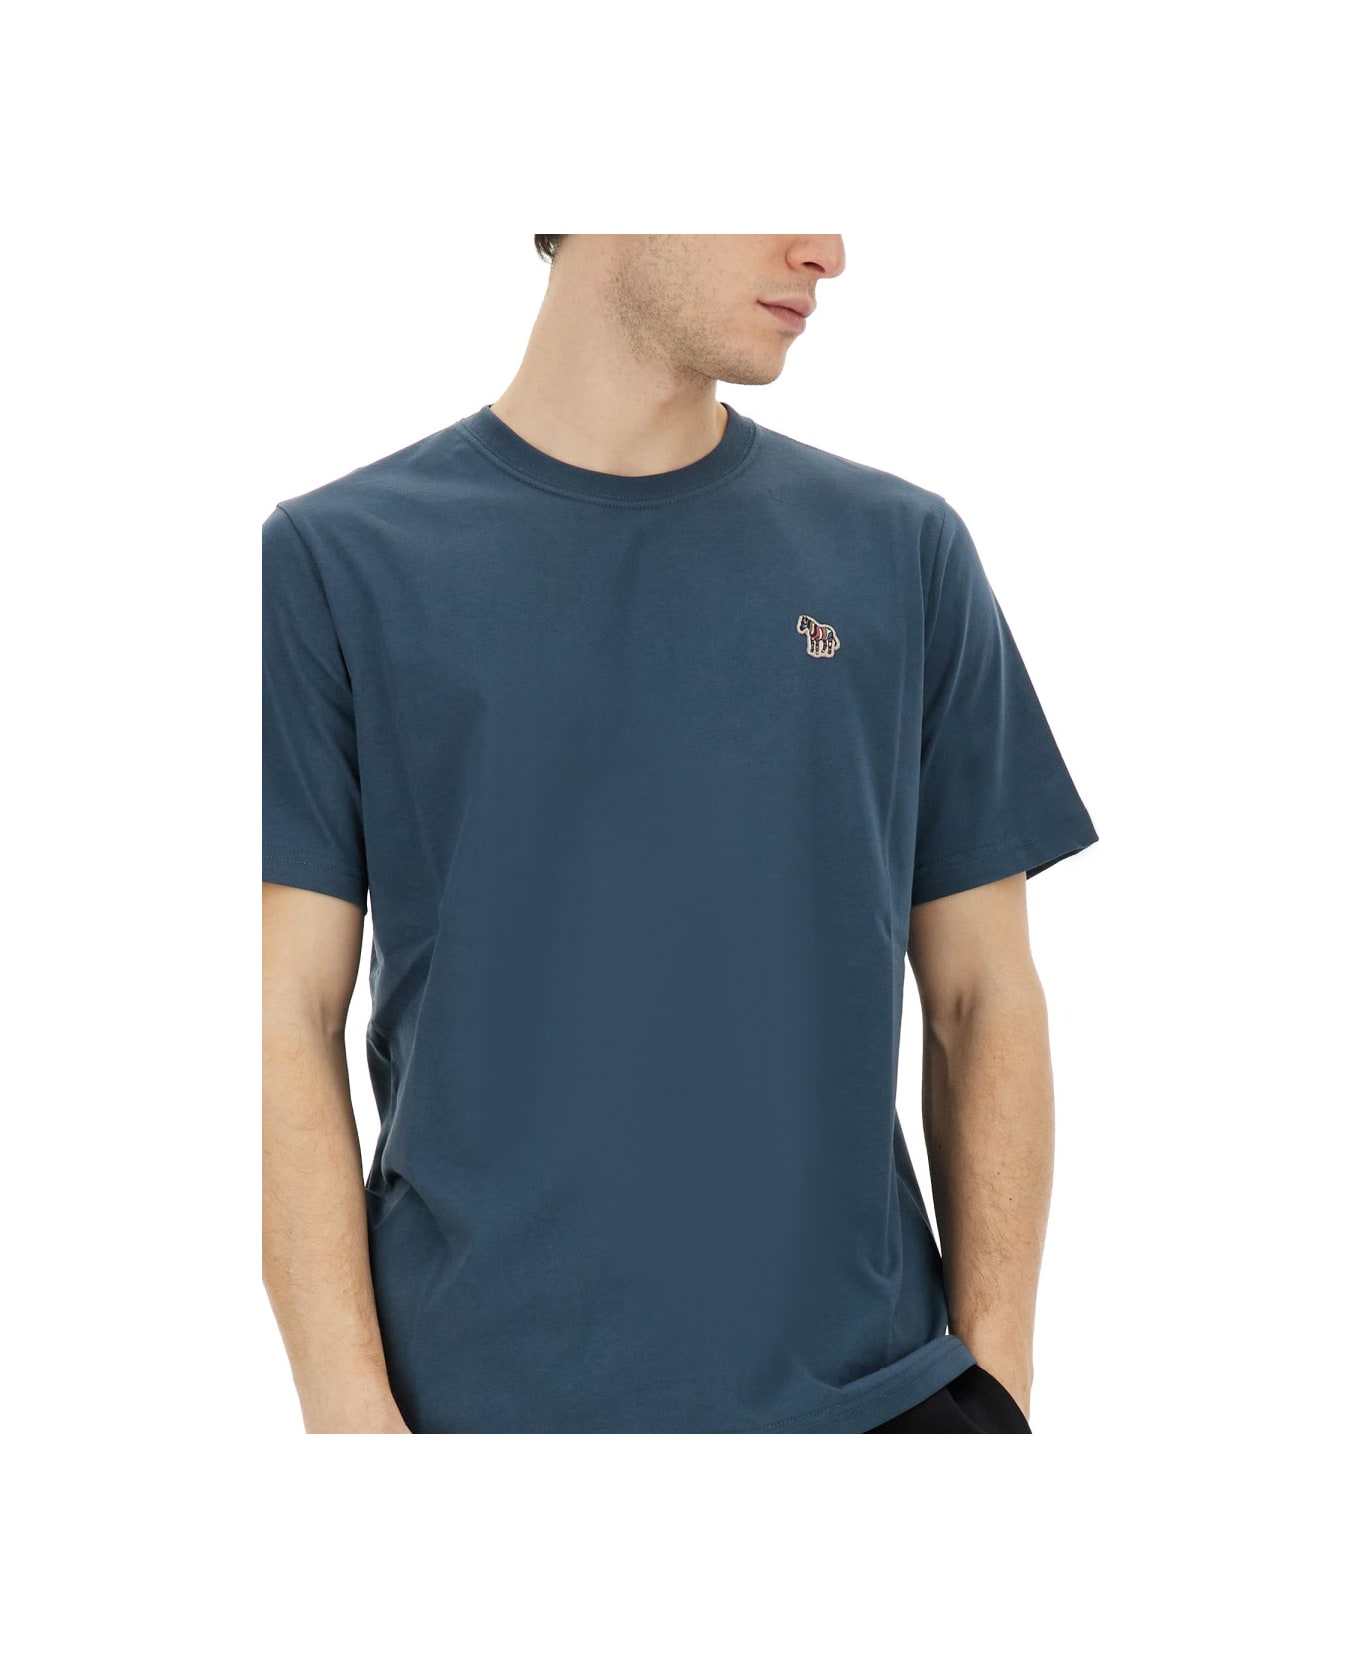 Paul Smith 'zebra' T-shirt - Blue シャツ